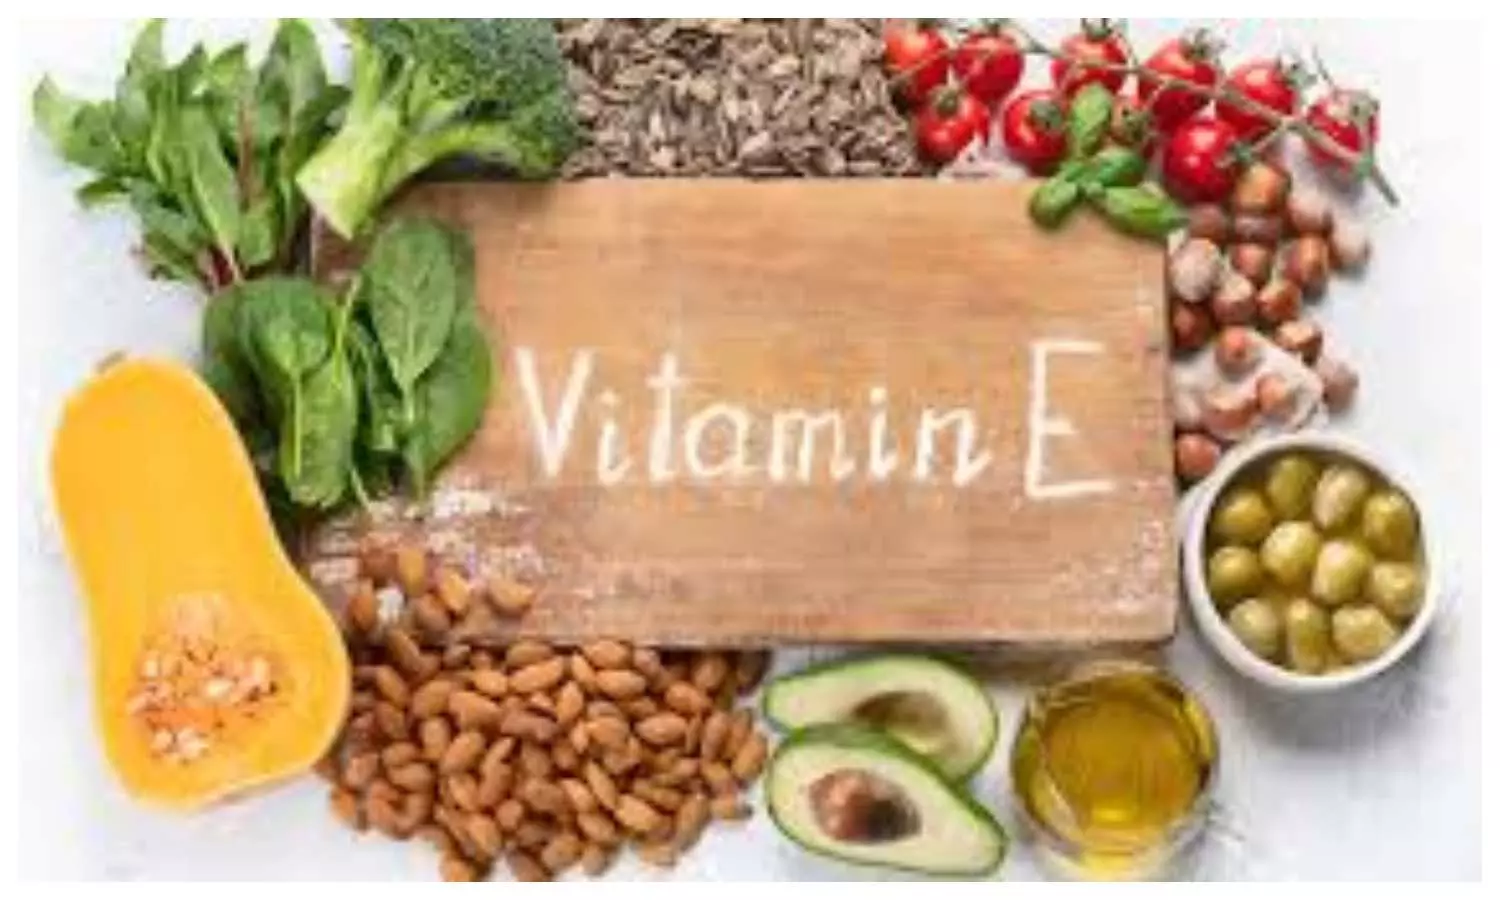 Vitamin E Rich Food Benefits